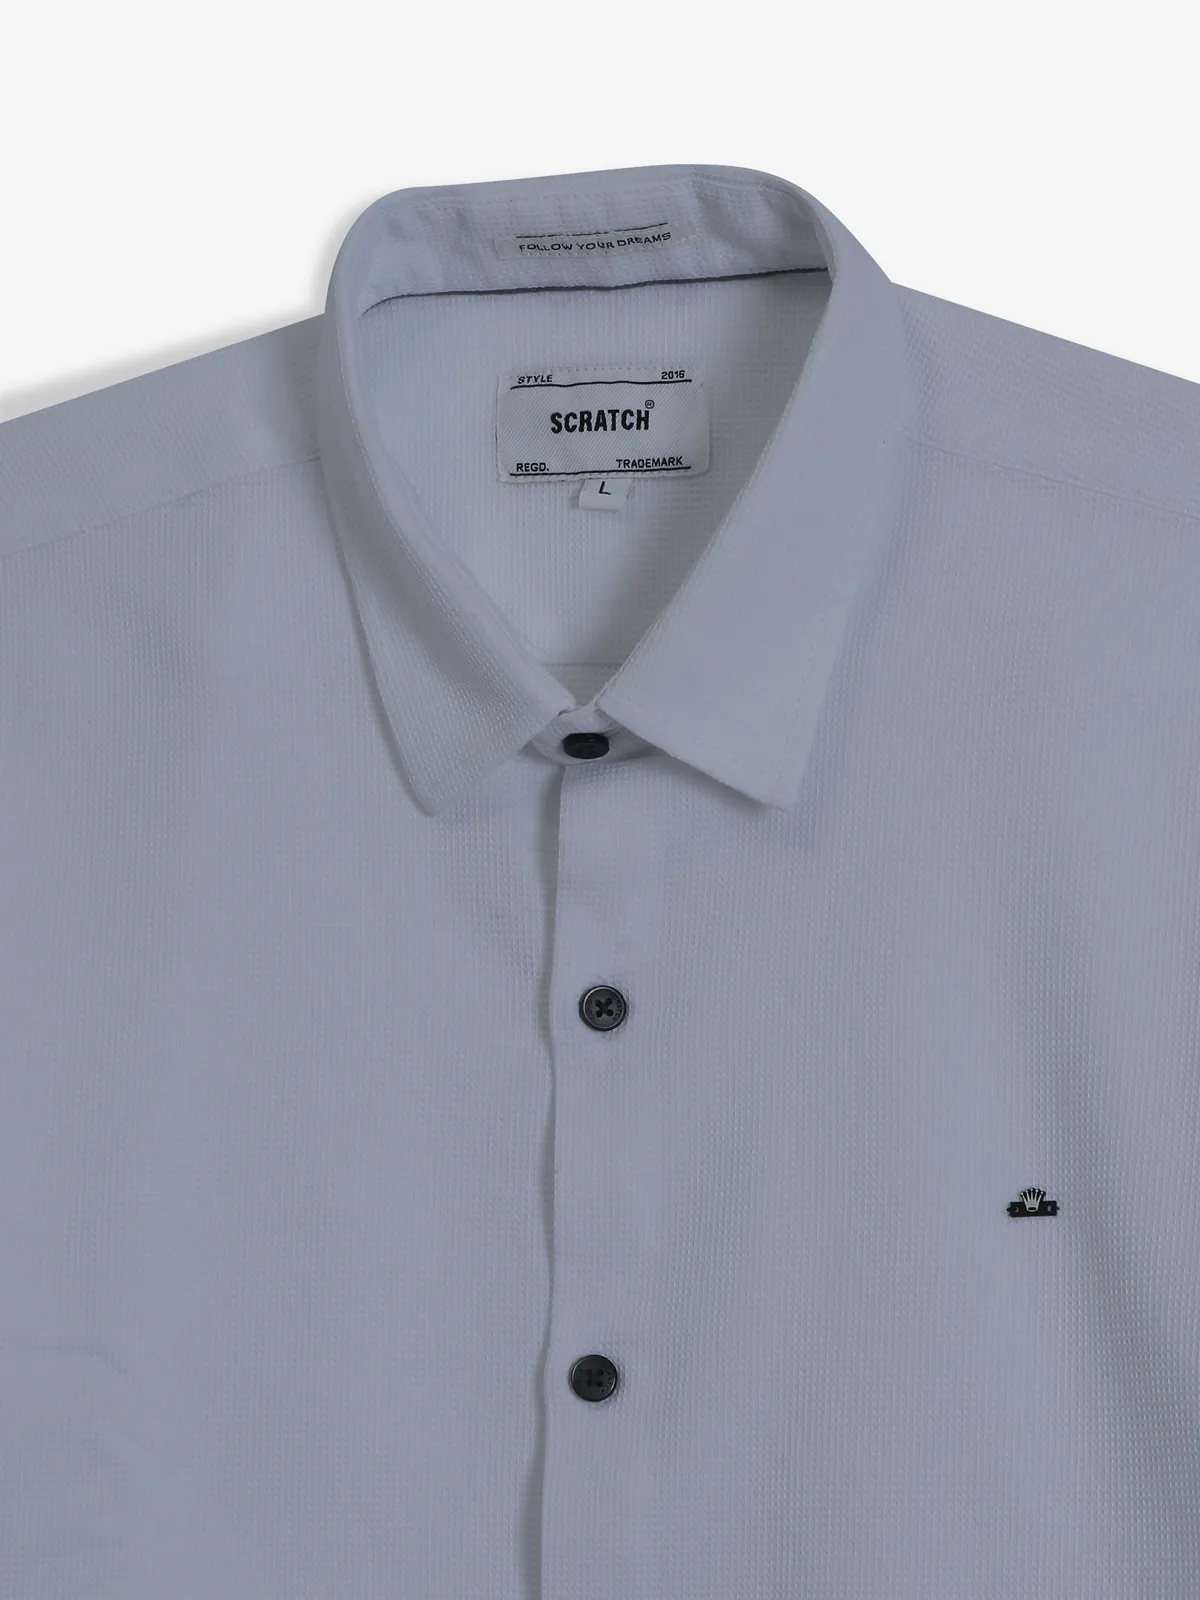 SCRATCH white texture casual shirt